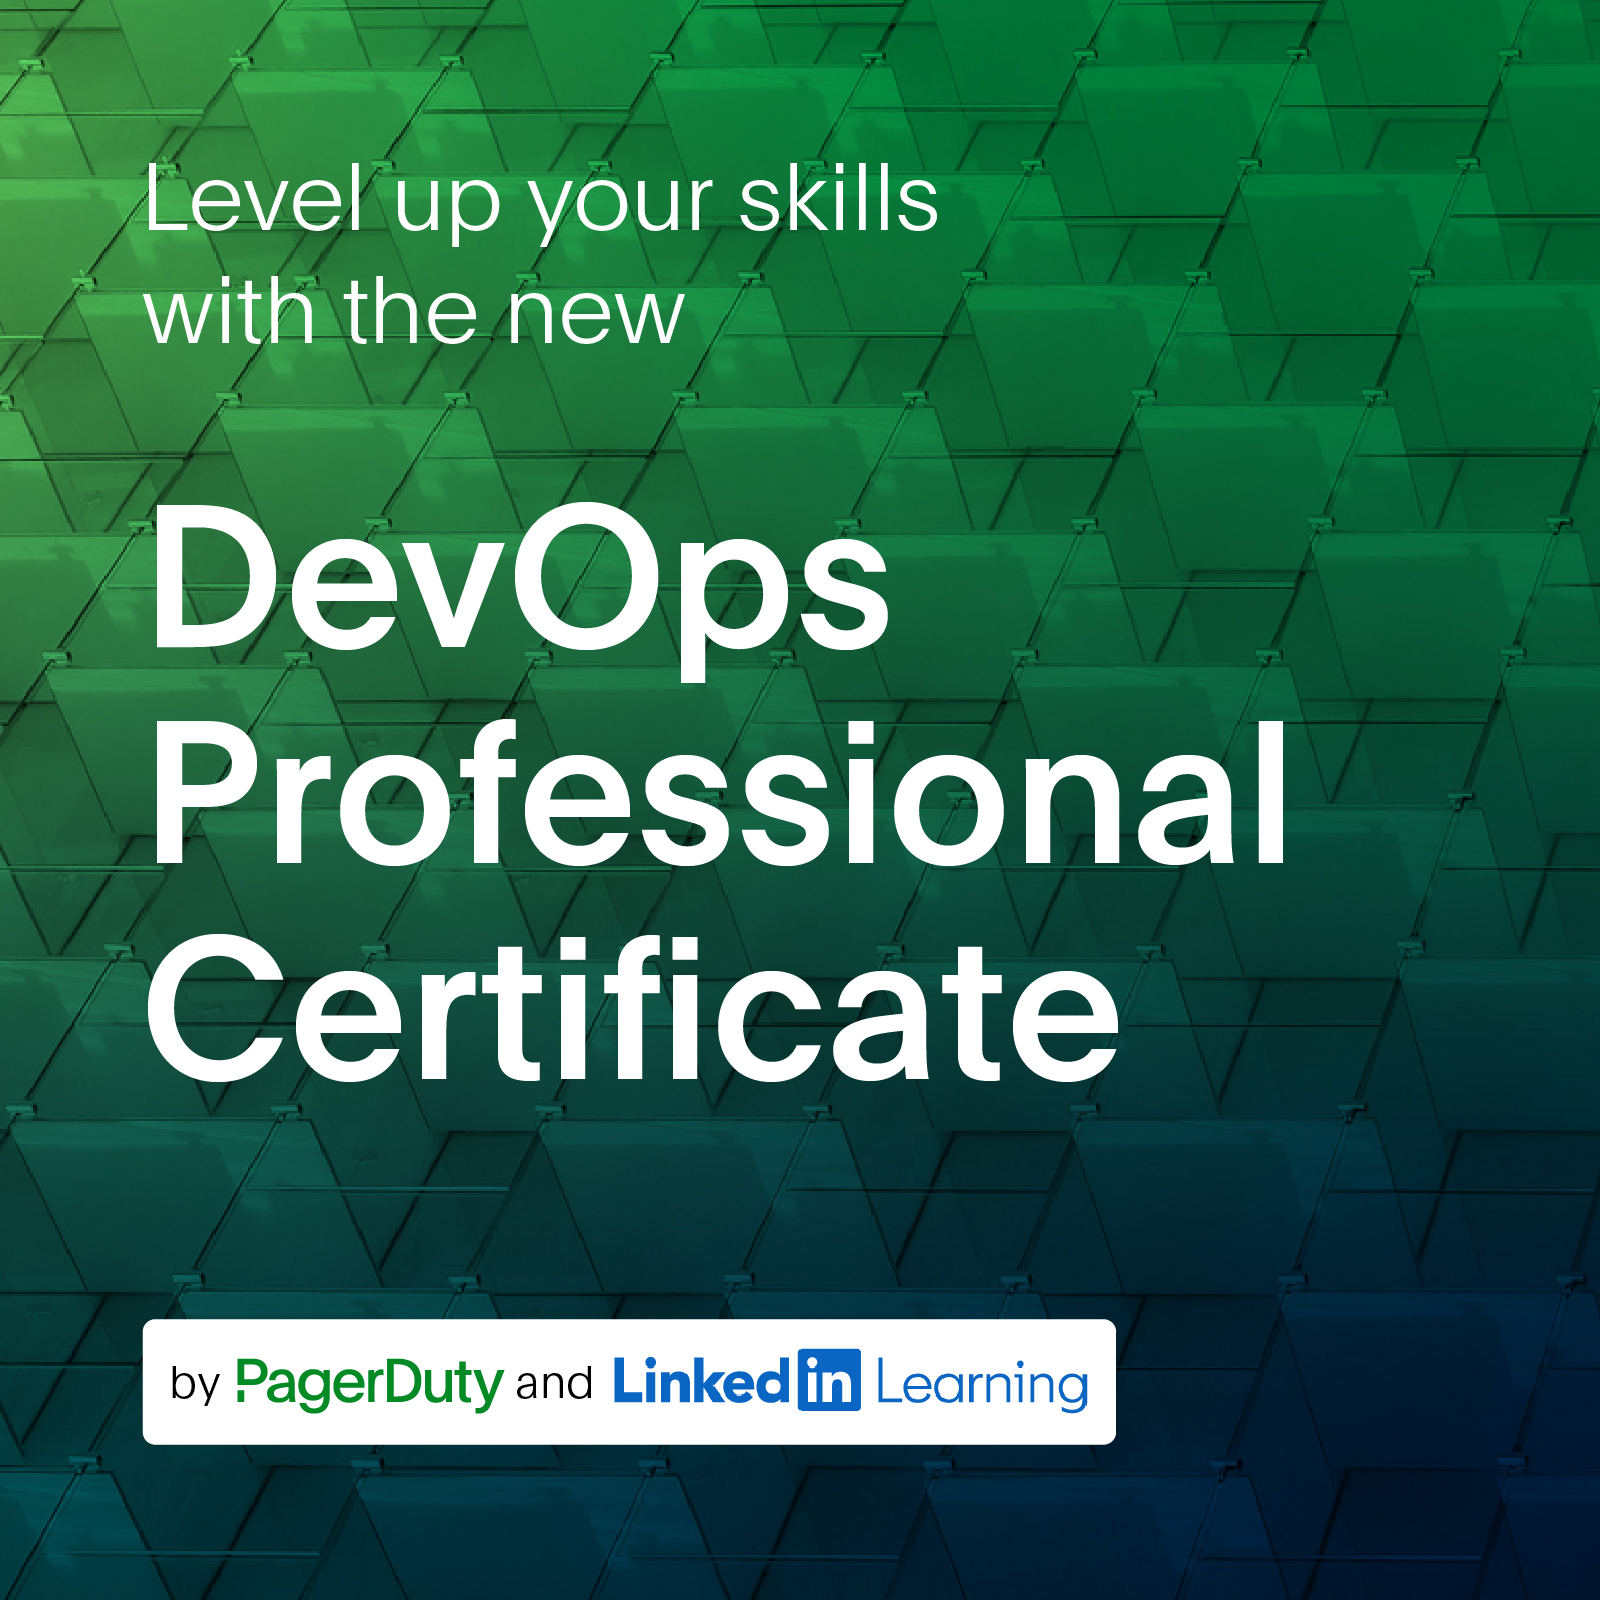 DevOps Certificate from PagerDuty and LinkedIn Learning